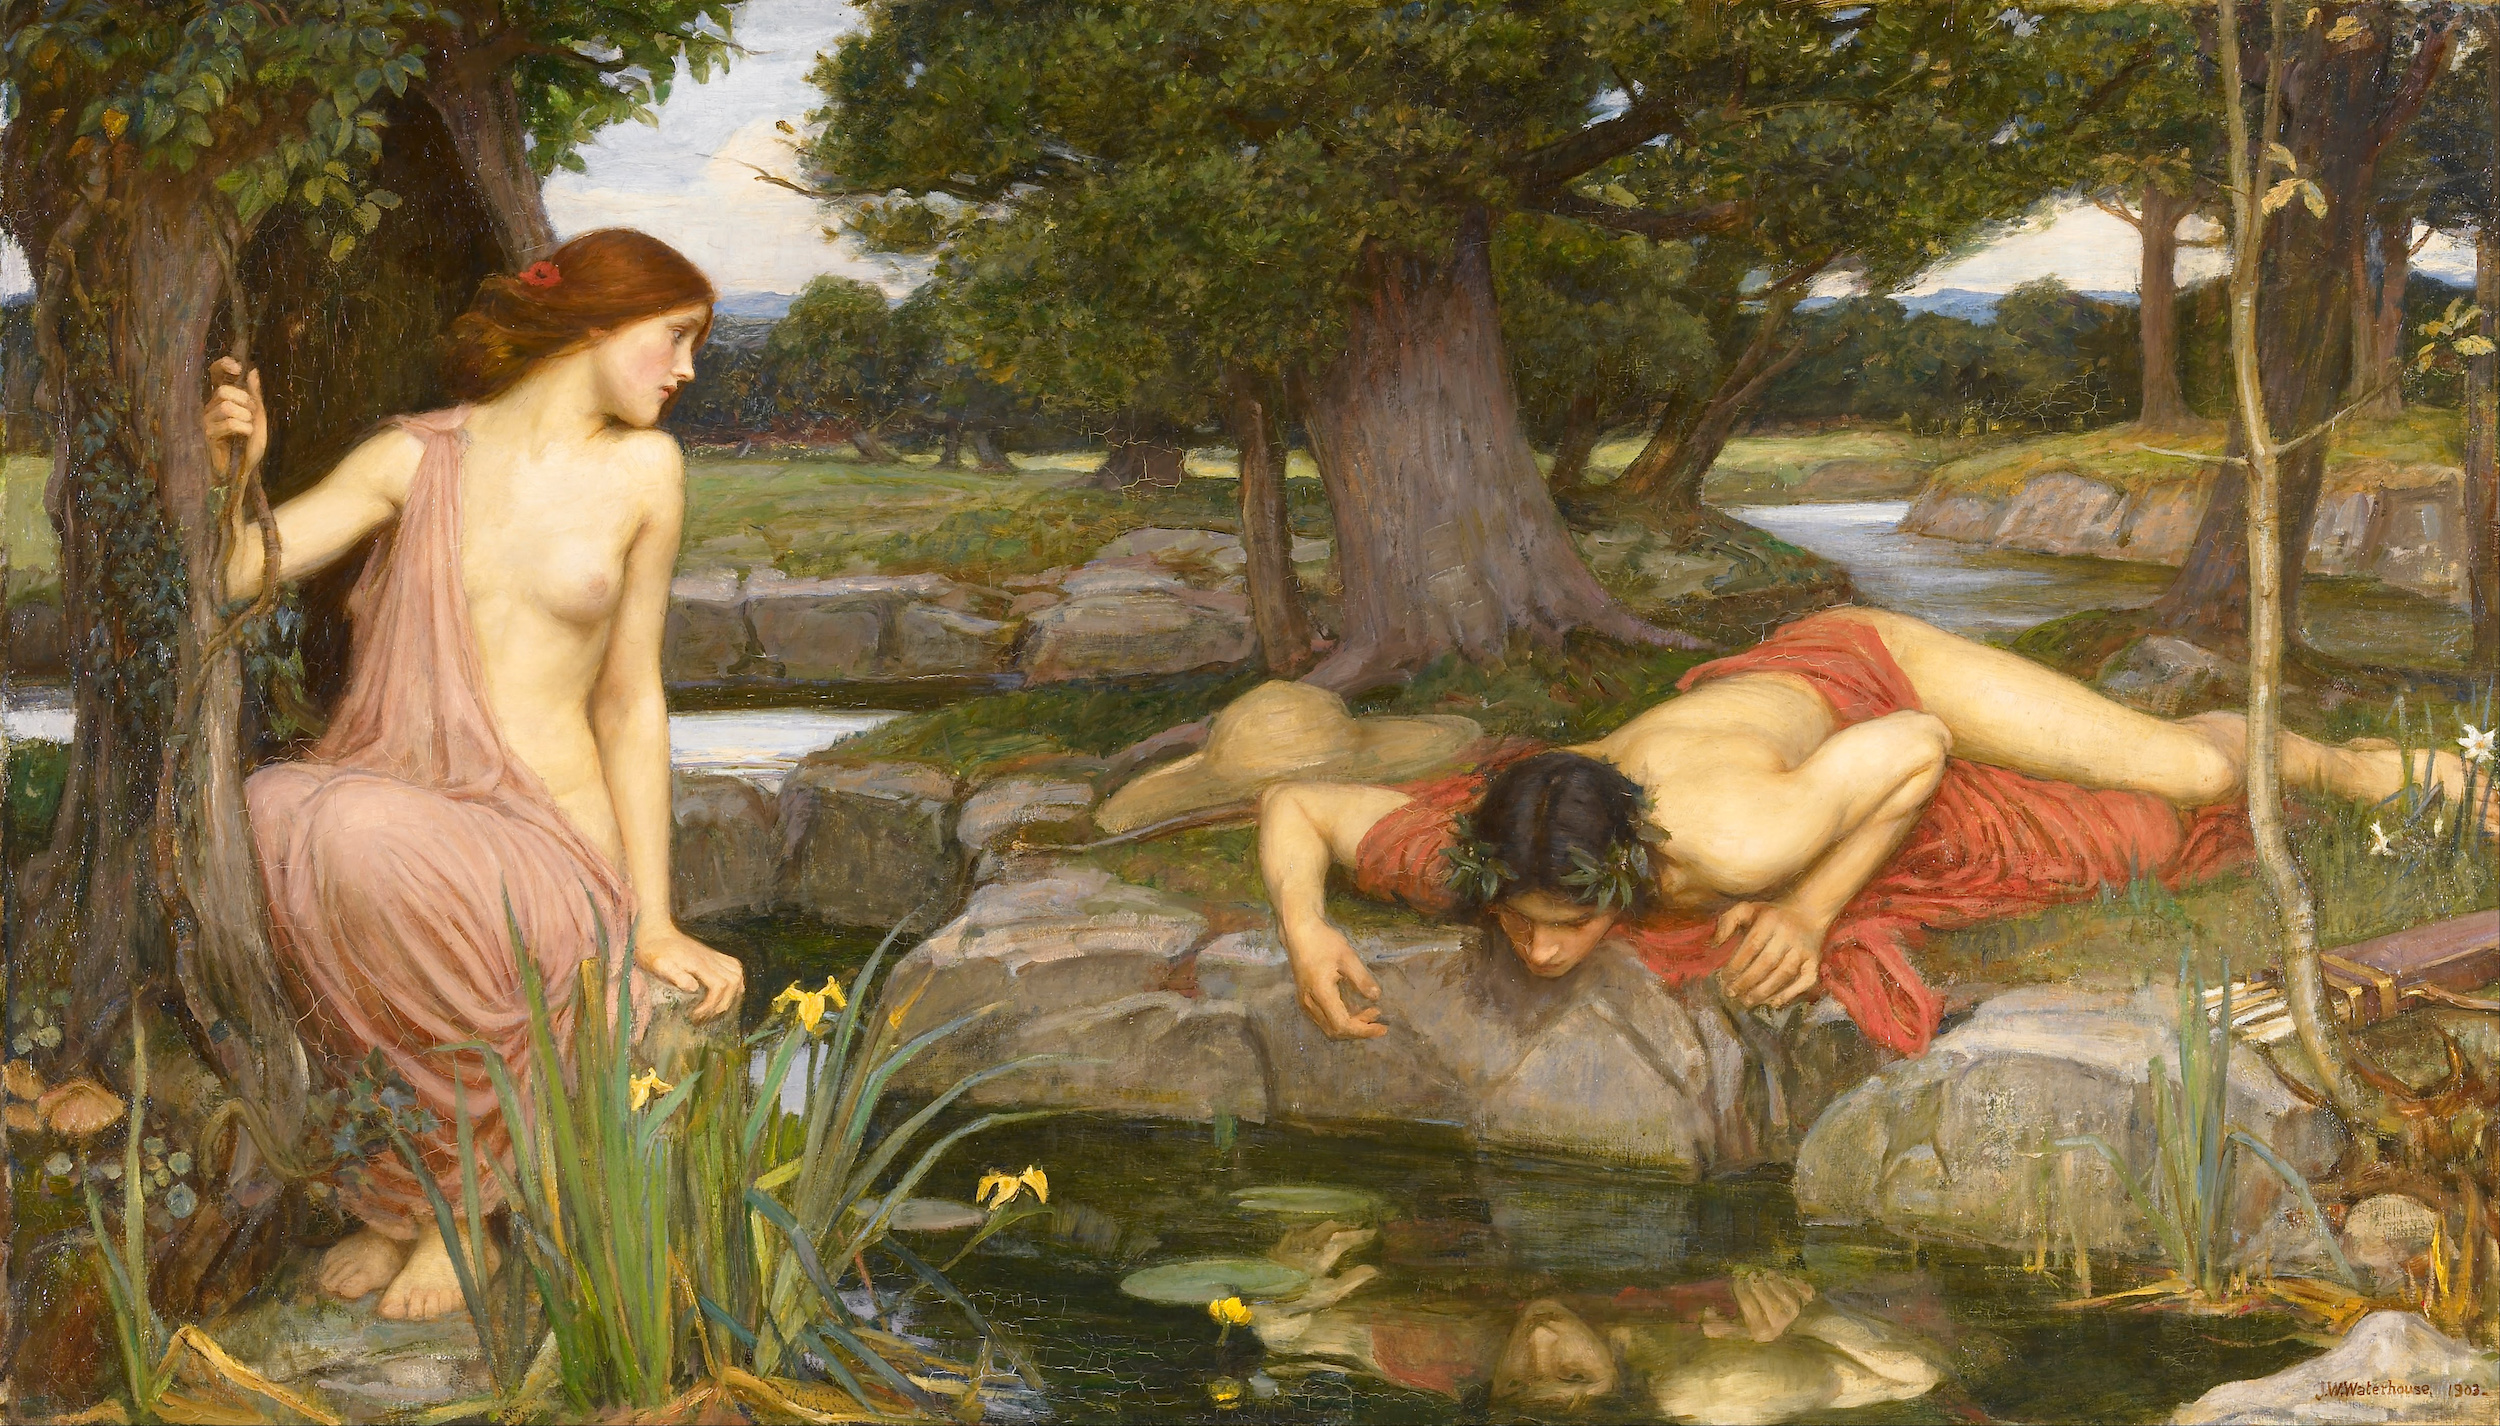 Echo and Narcissus by John William Waterhouse - 1903 - 109.2 cm × 189.2 cm Walker Art Gallery